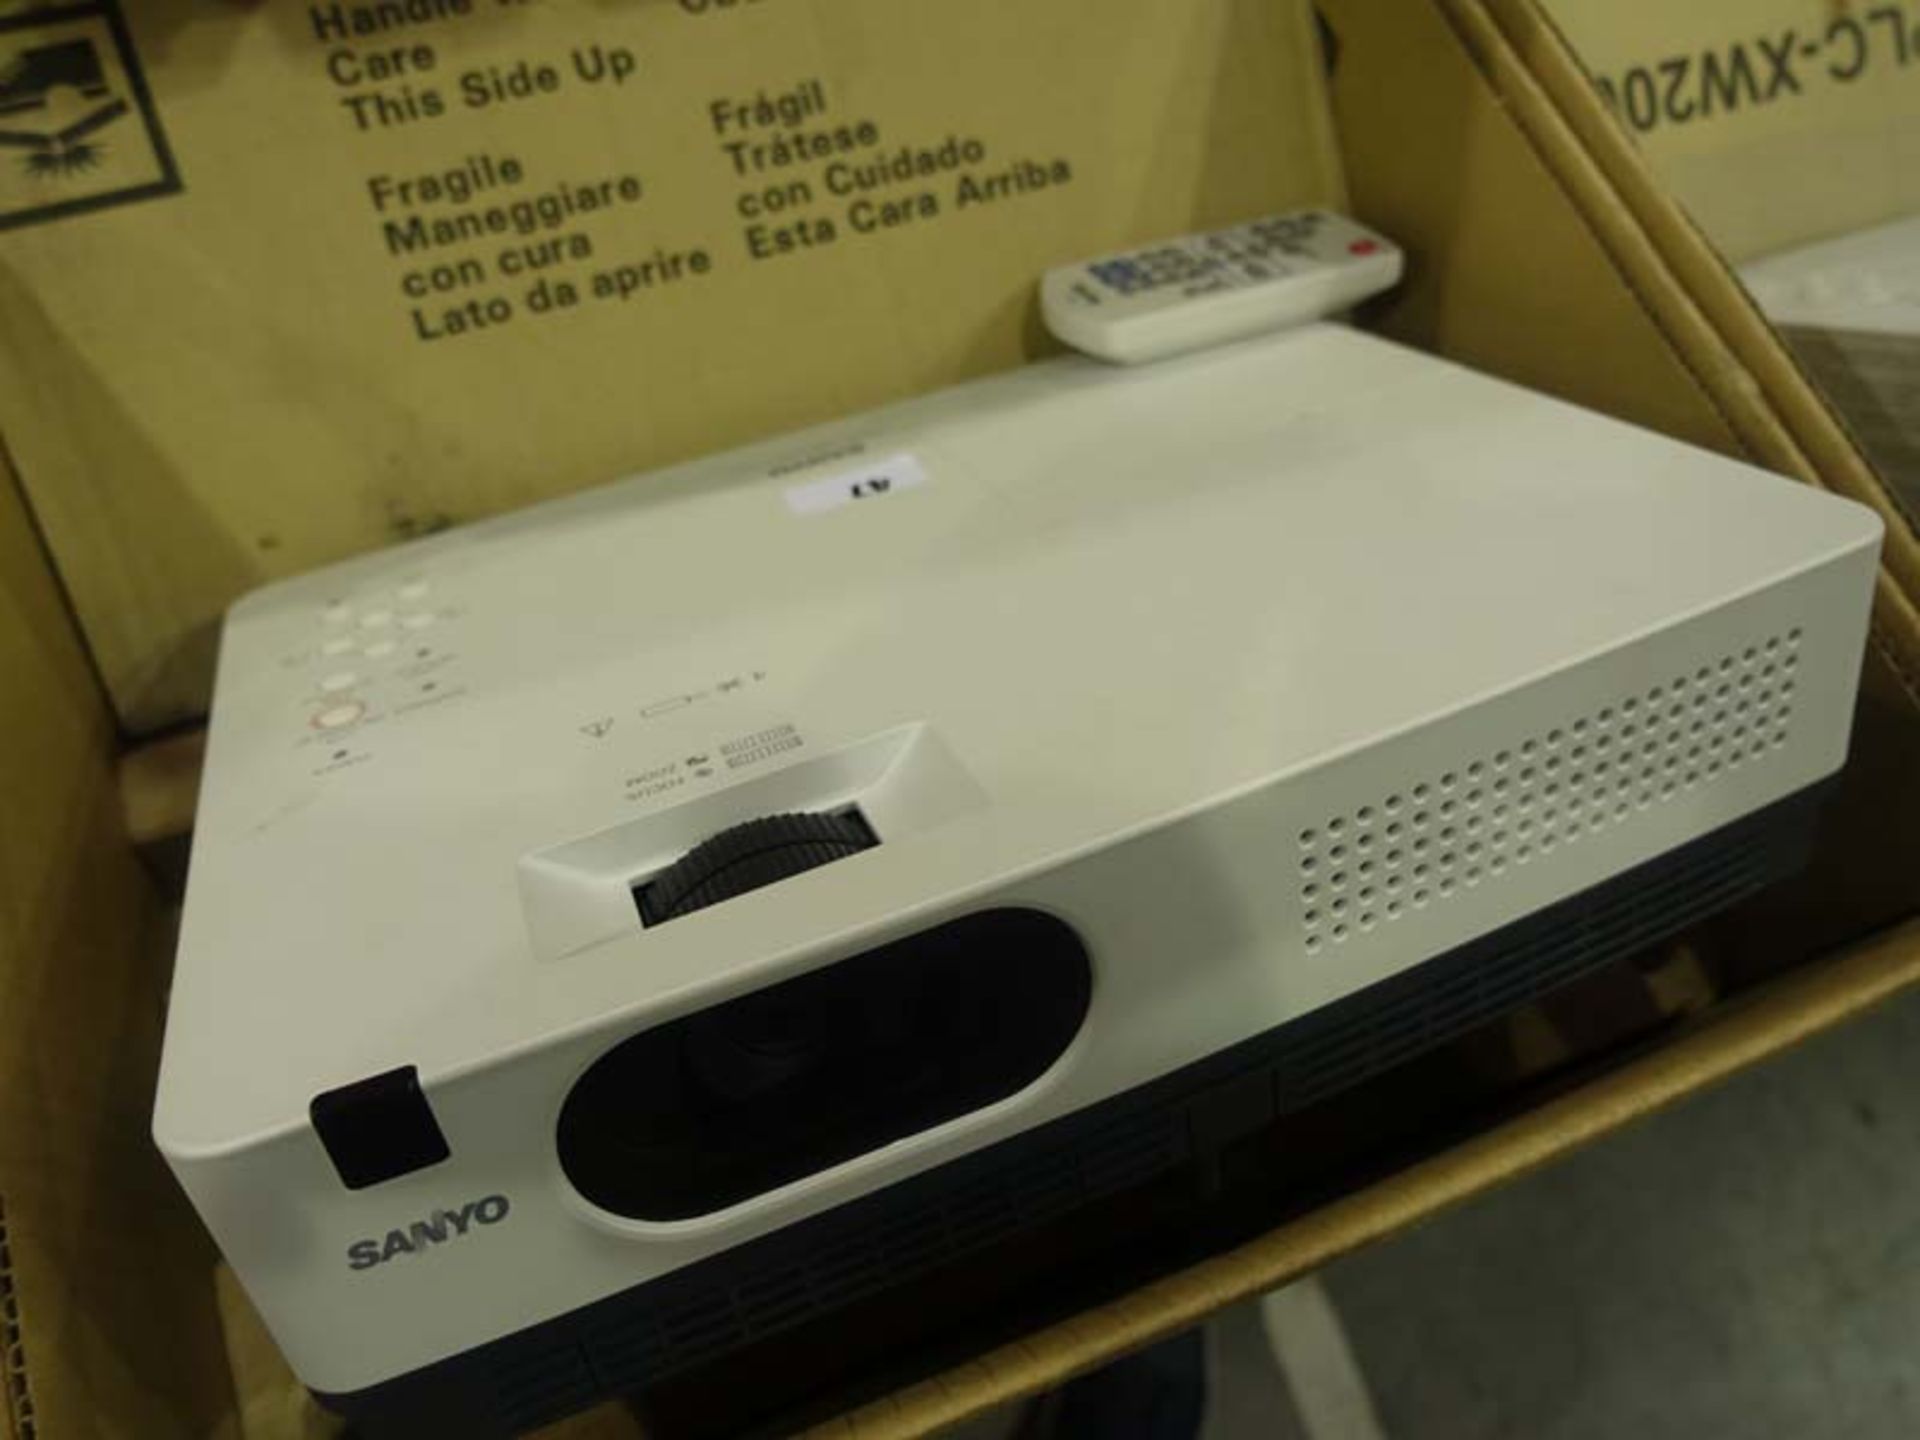 Sanyo model PLC-XW200 XGA projector with box